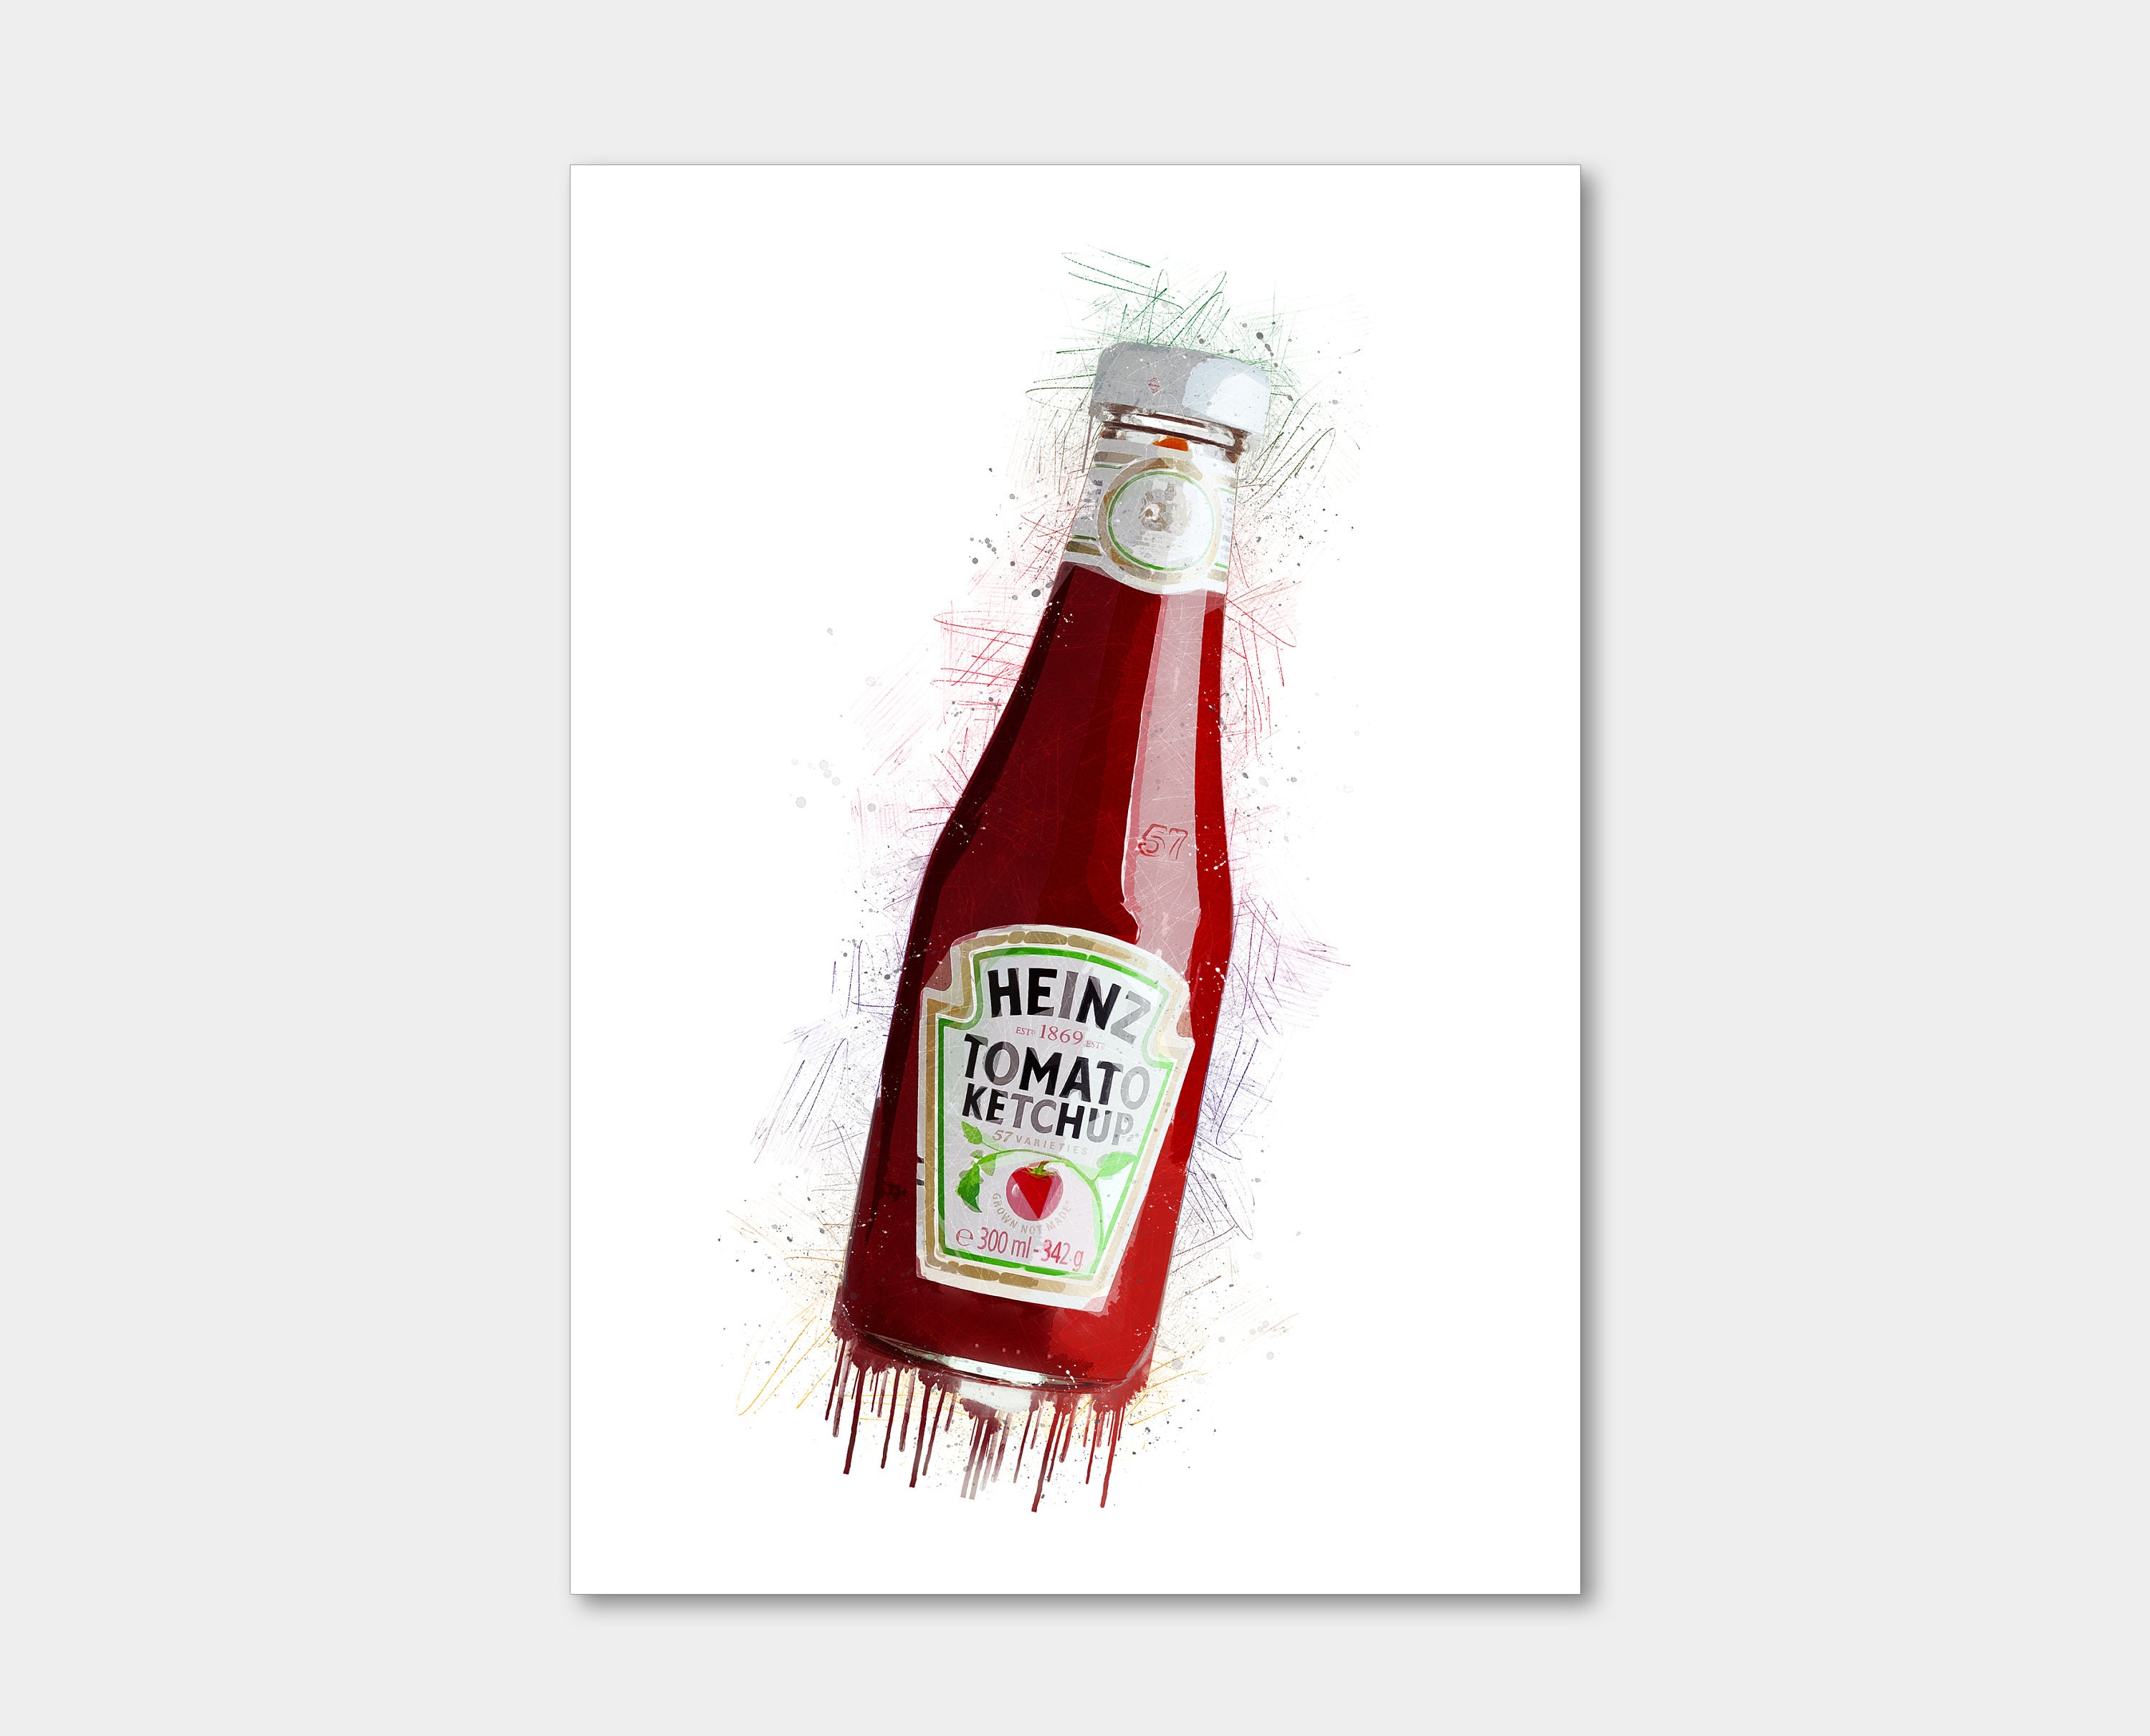 Heinz Tomato Ketchup Glass (12 x 342g)